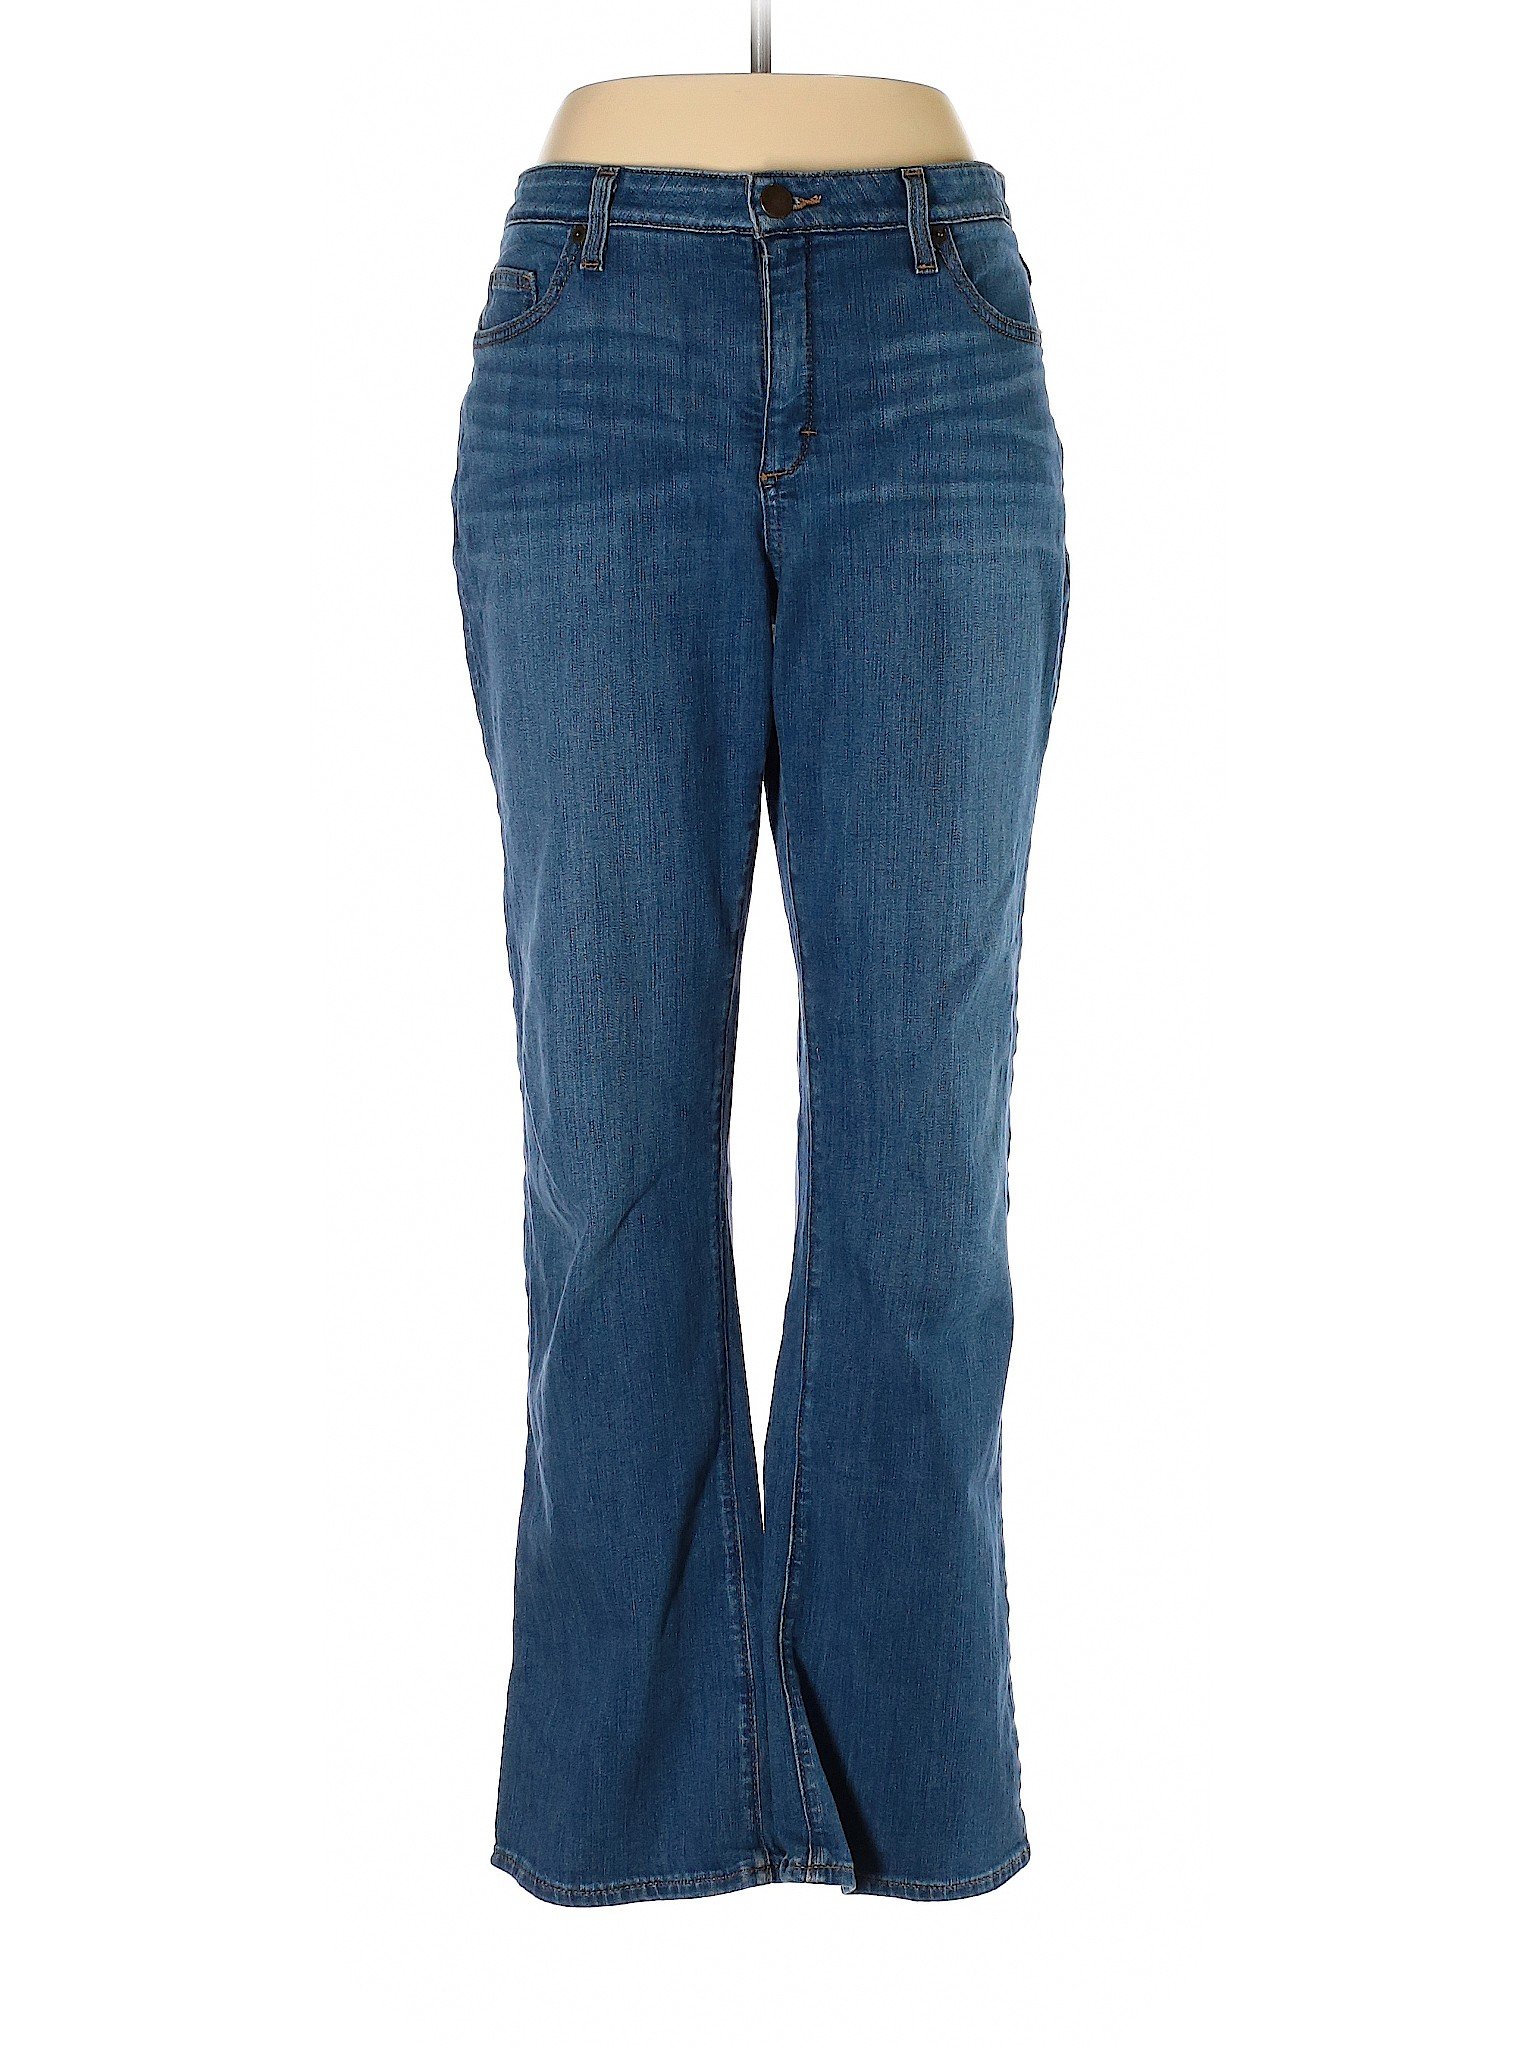 SPANX Women Blue Jeans 32W | eBay